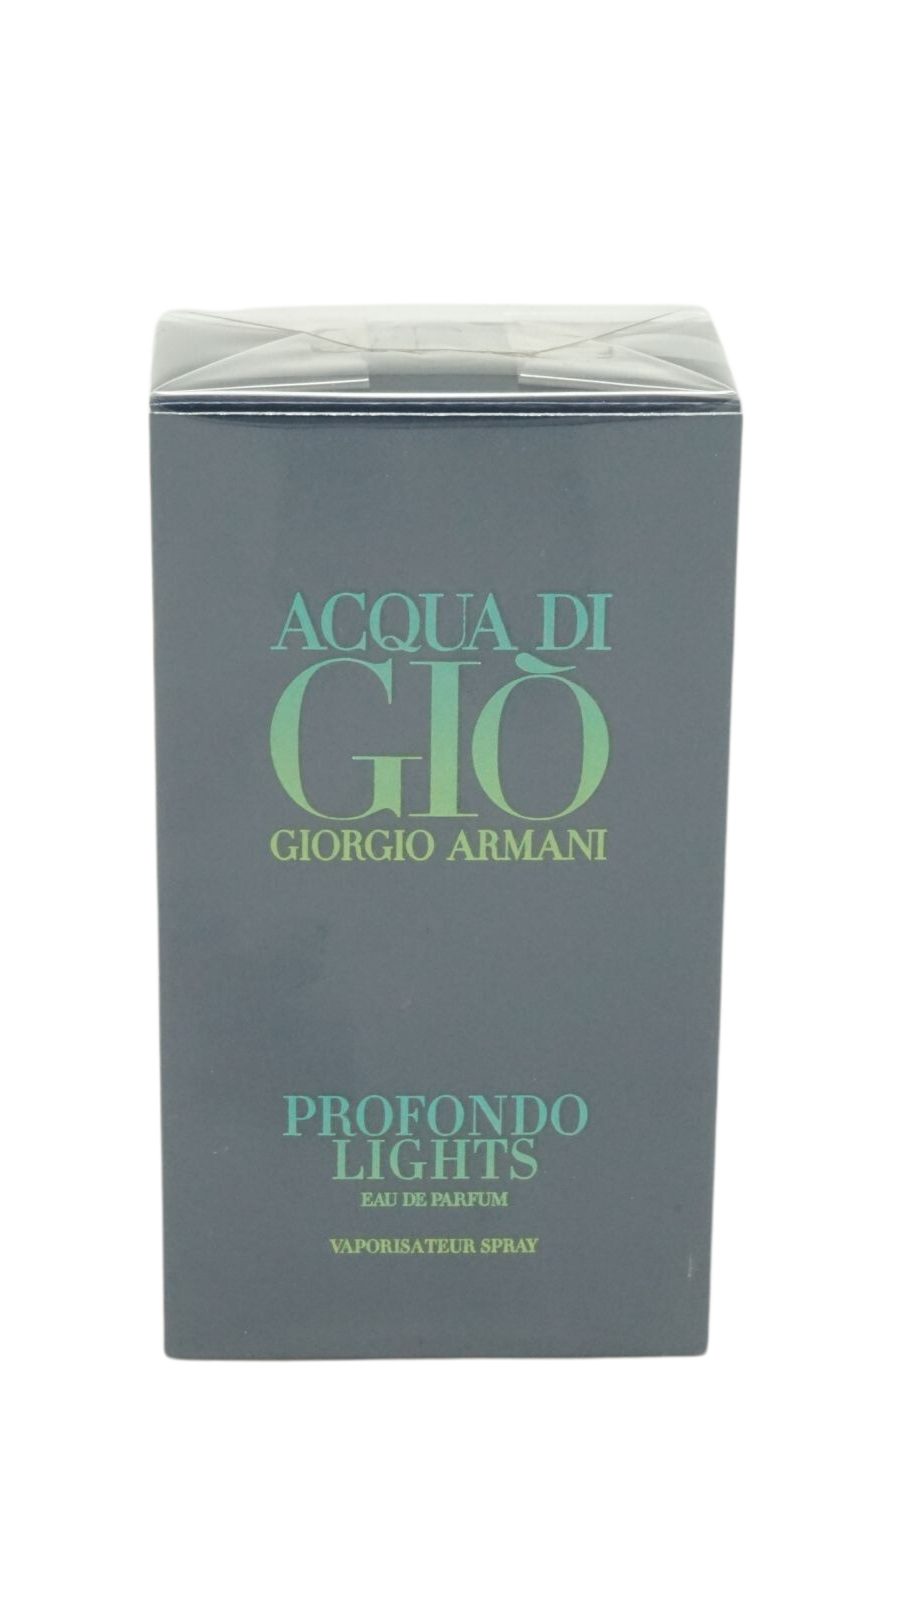 Giorgio Toilette Armani Lights Profondo di Gio parfum de 40ml Armani Acqua Eau Eau Giorgio de